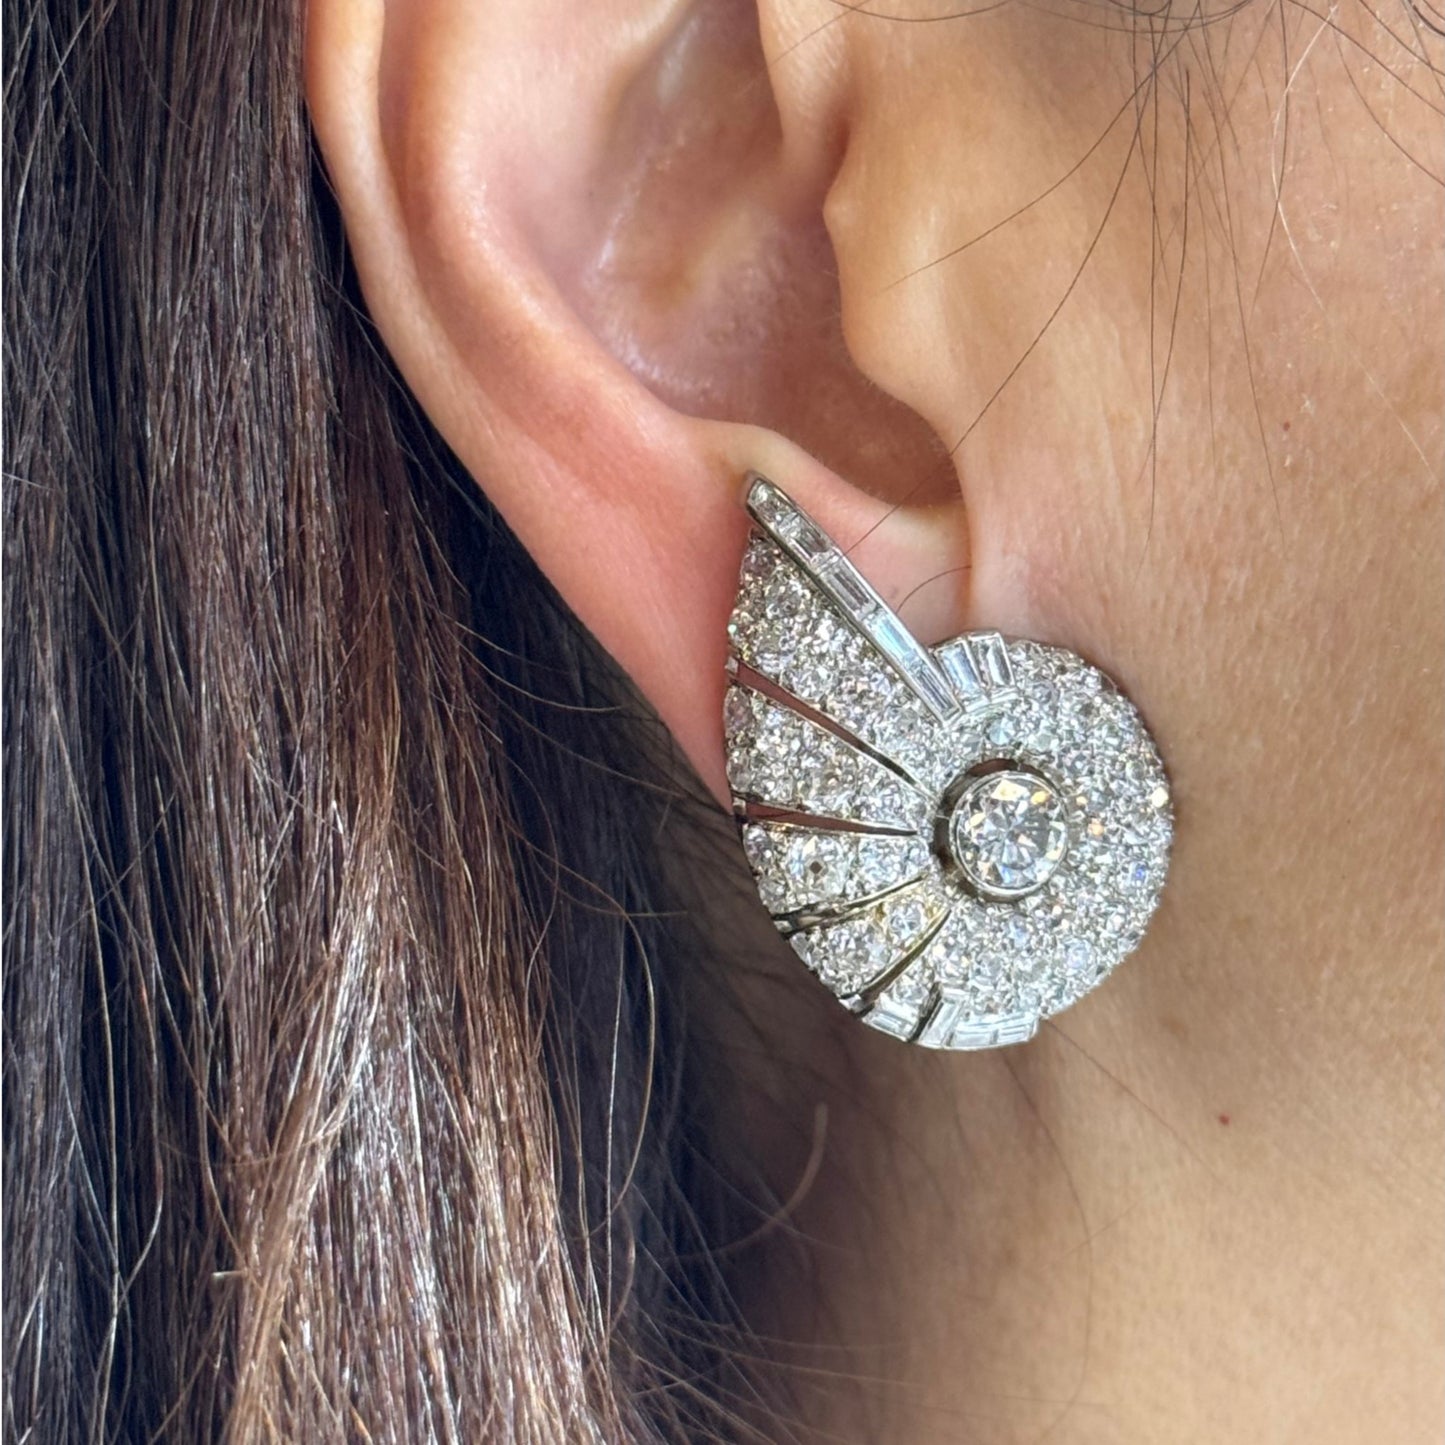 French Art Deco Platinum Diamond Earrings on ear